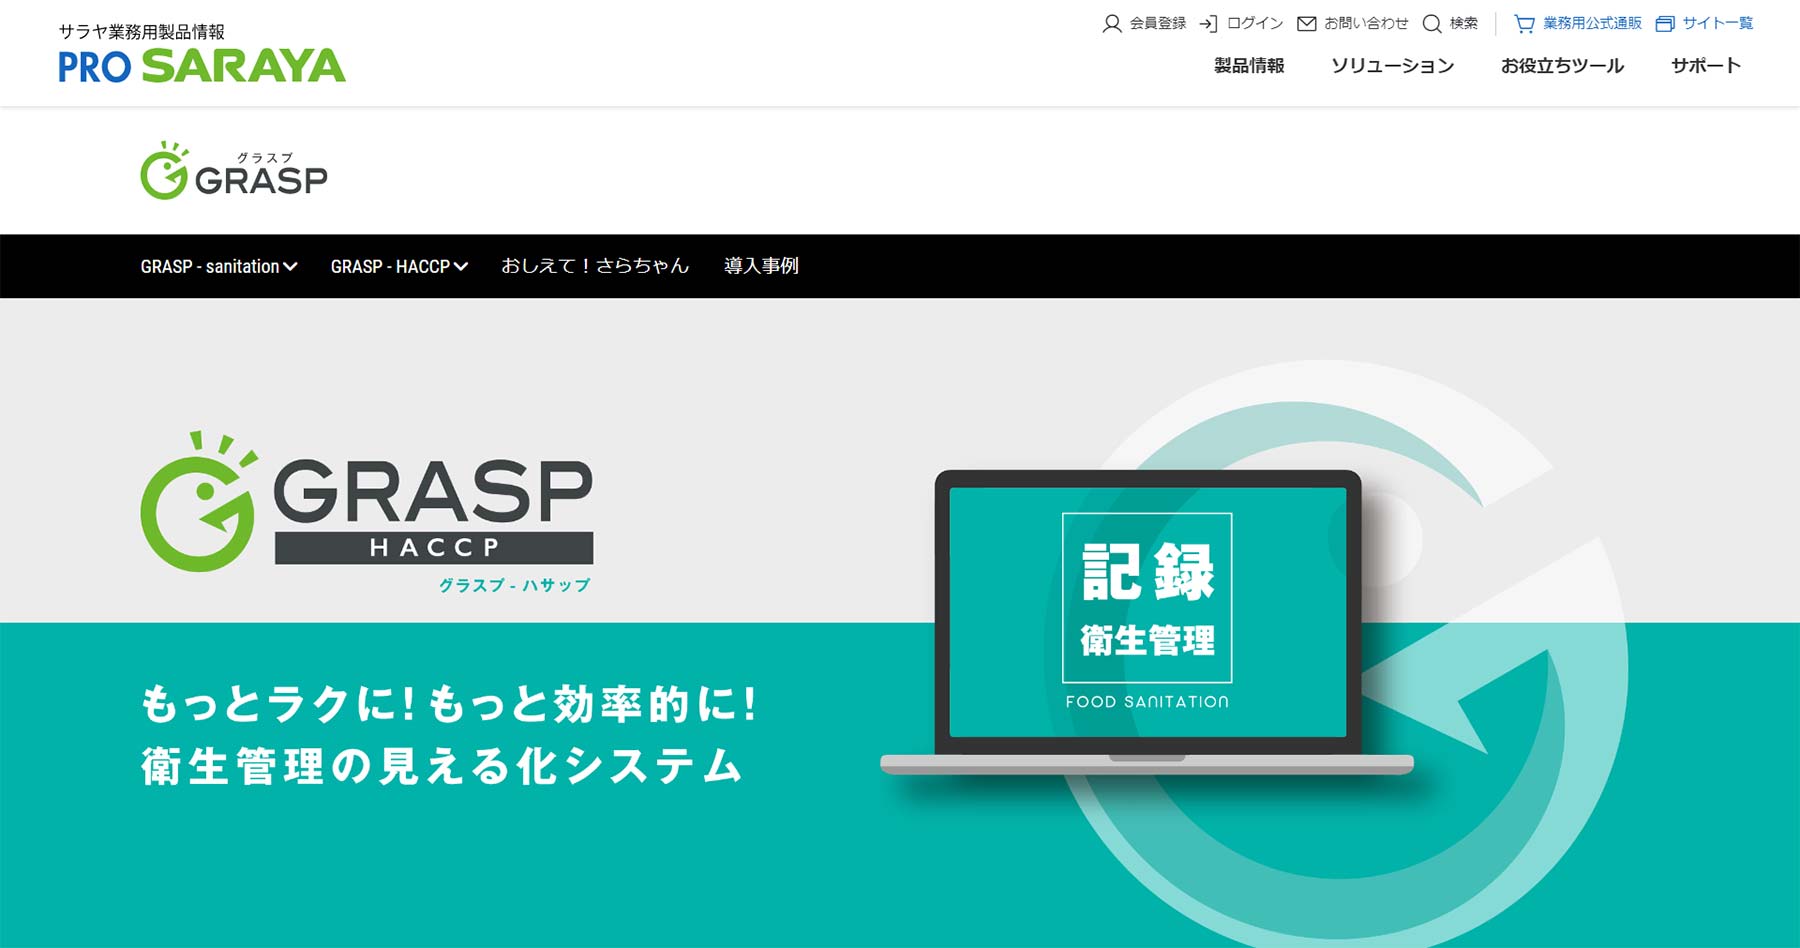 GRASP-HACCP公式Webサイト